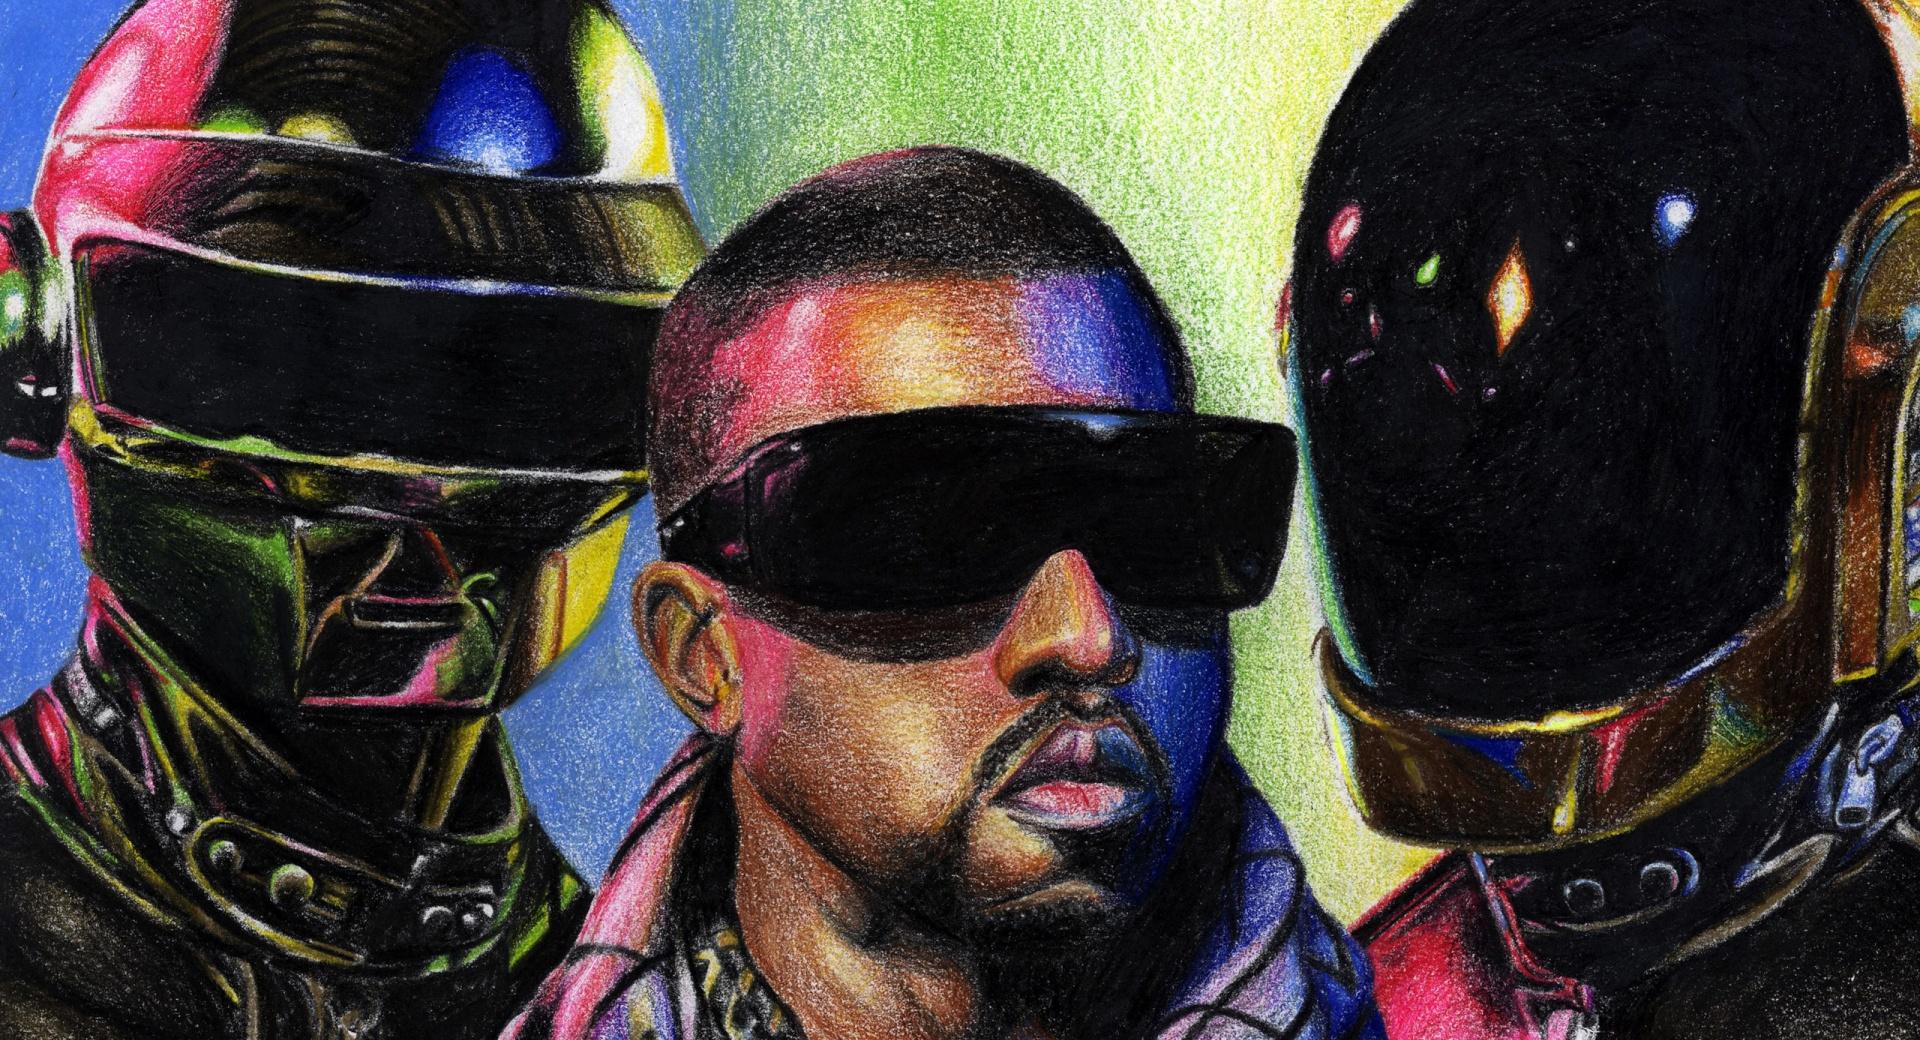 Daft Punk vs. Kanye West wallpapers HD quality